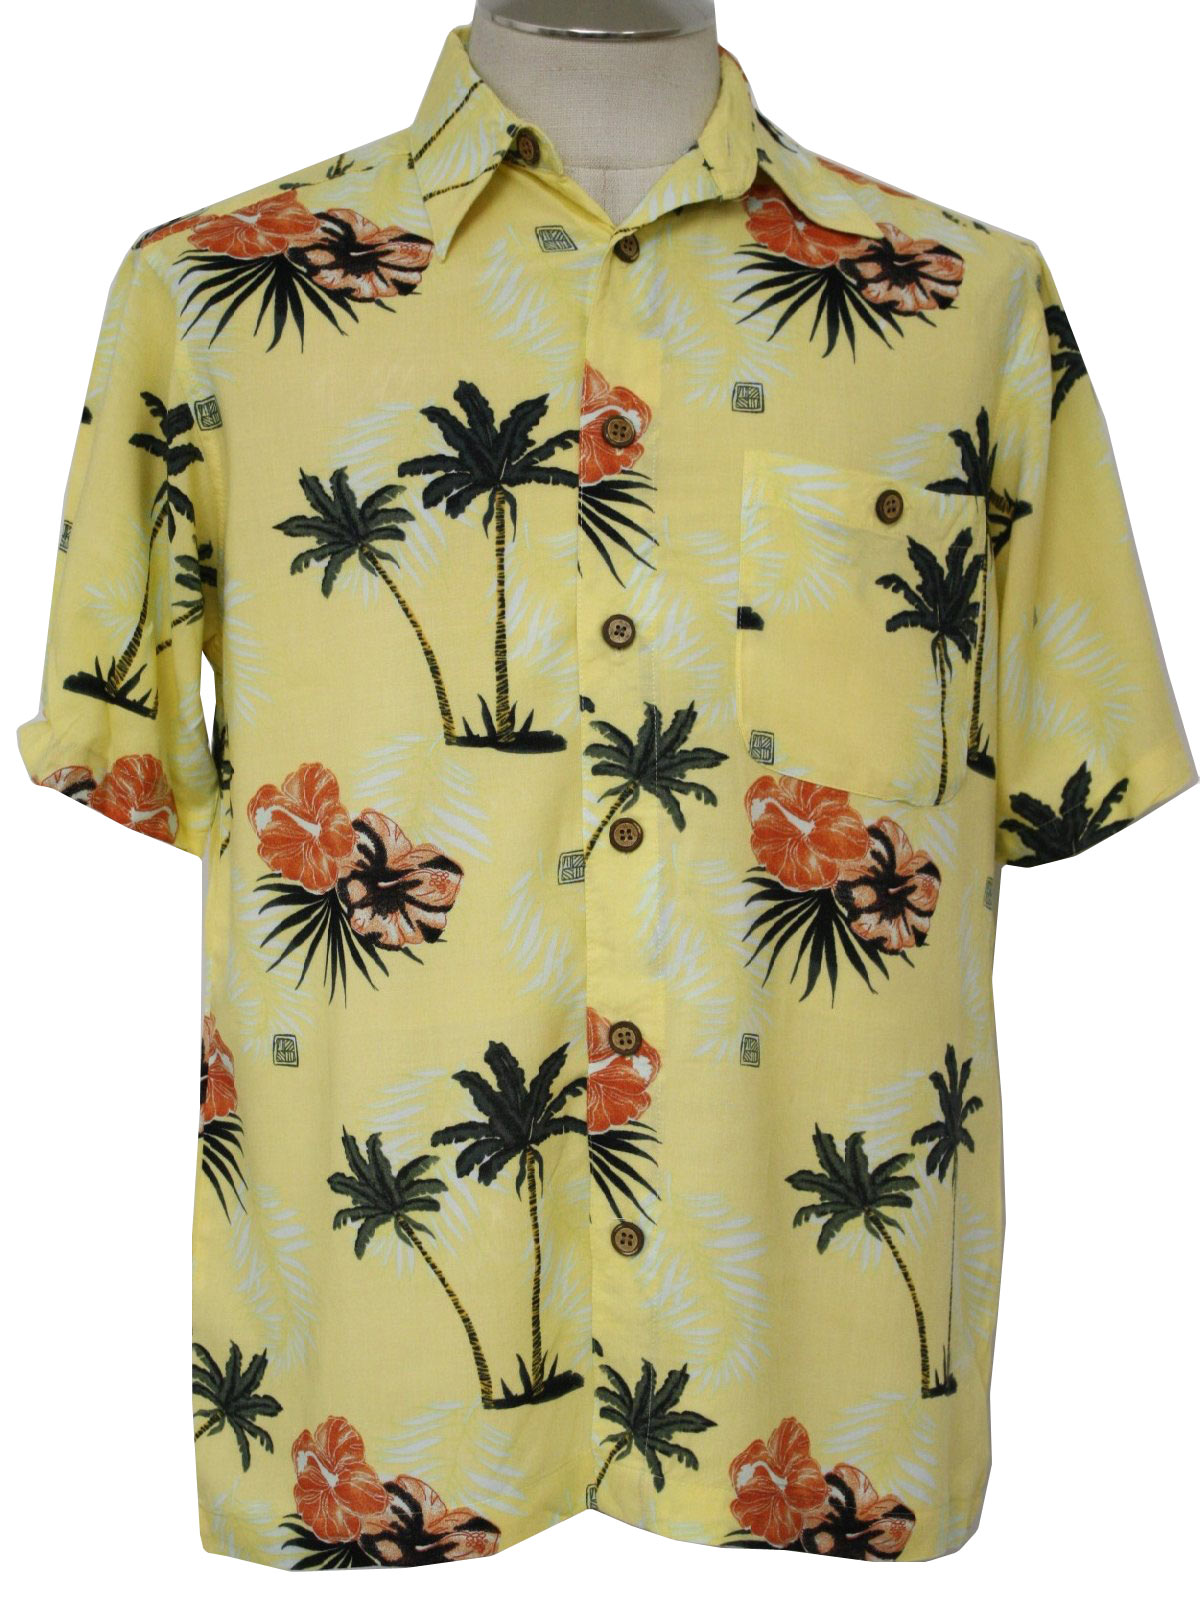 1990s Vintage Hawaiian Shirt: 90s -Knights bridge- Mens yellow, black ...